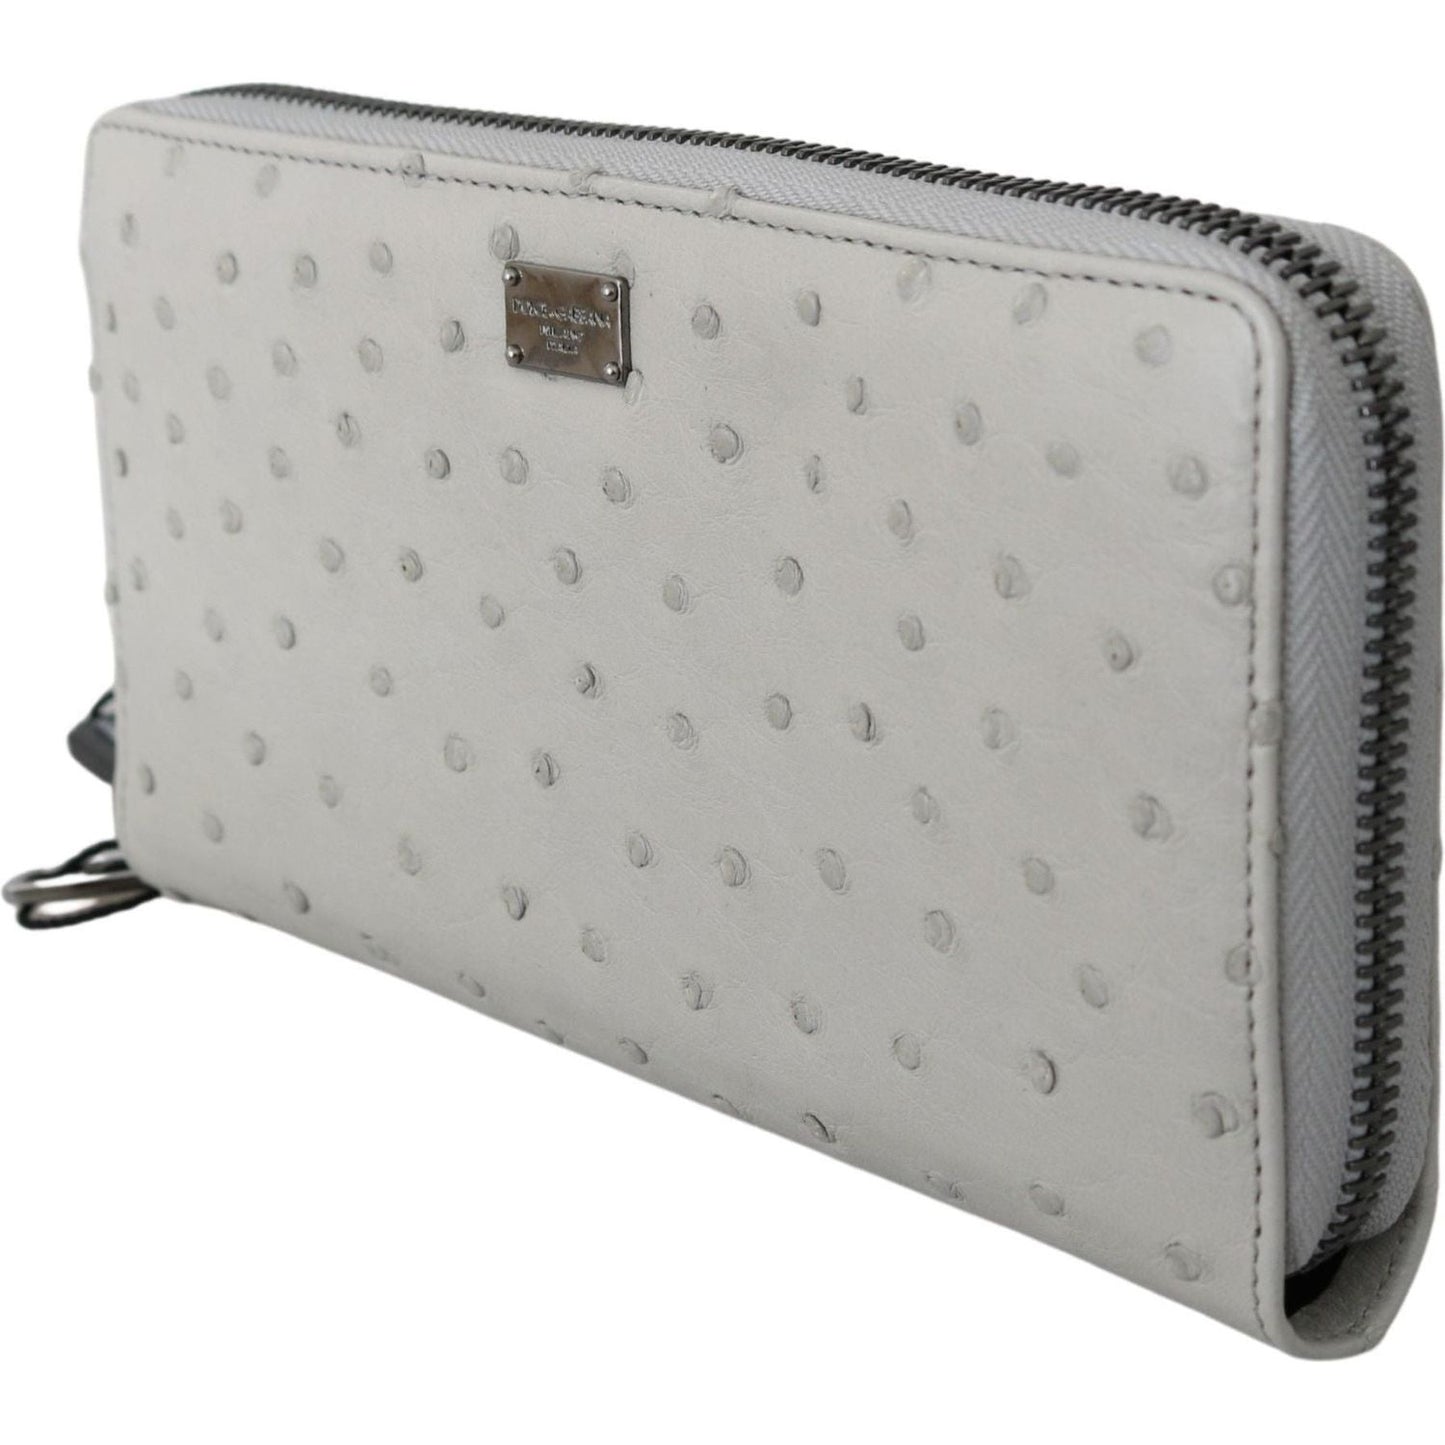 Dolce & Gabbana Elegant Ostrich Leather Continental Wallet Clutch white-ostrich-leather-continental-mens-clutch-wallet IMG_4324-873cc79c-501.jpg